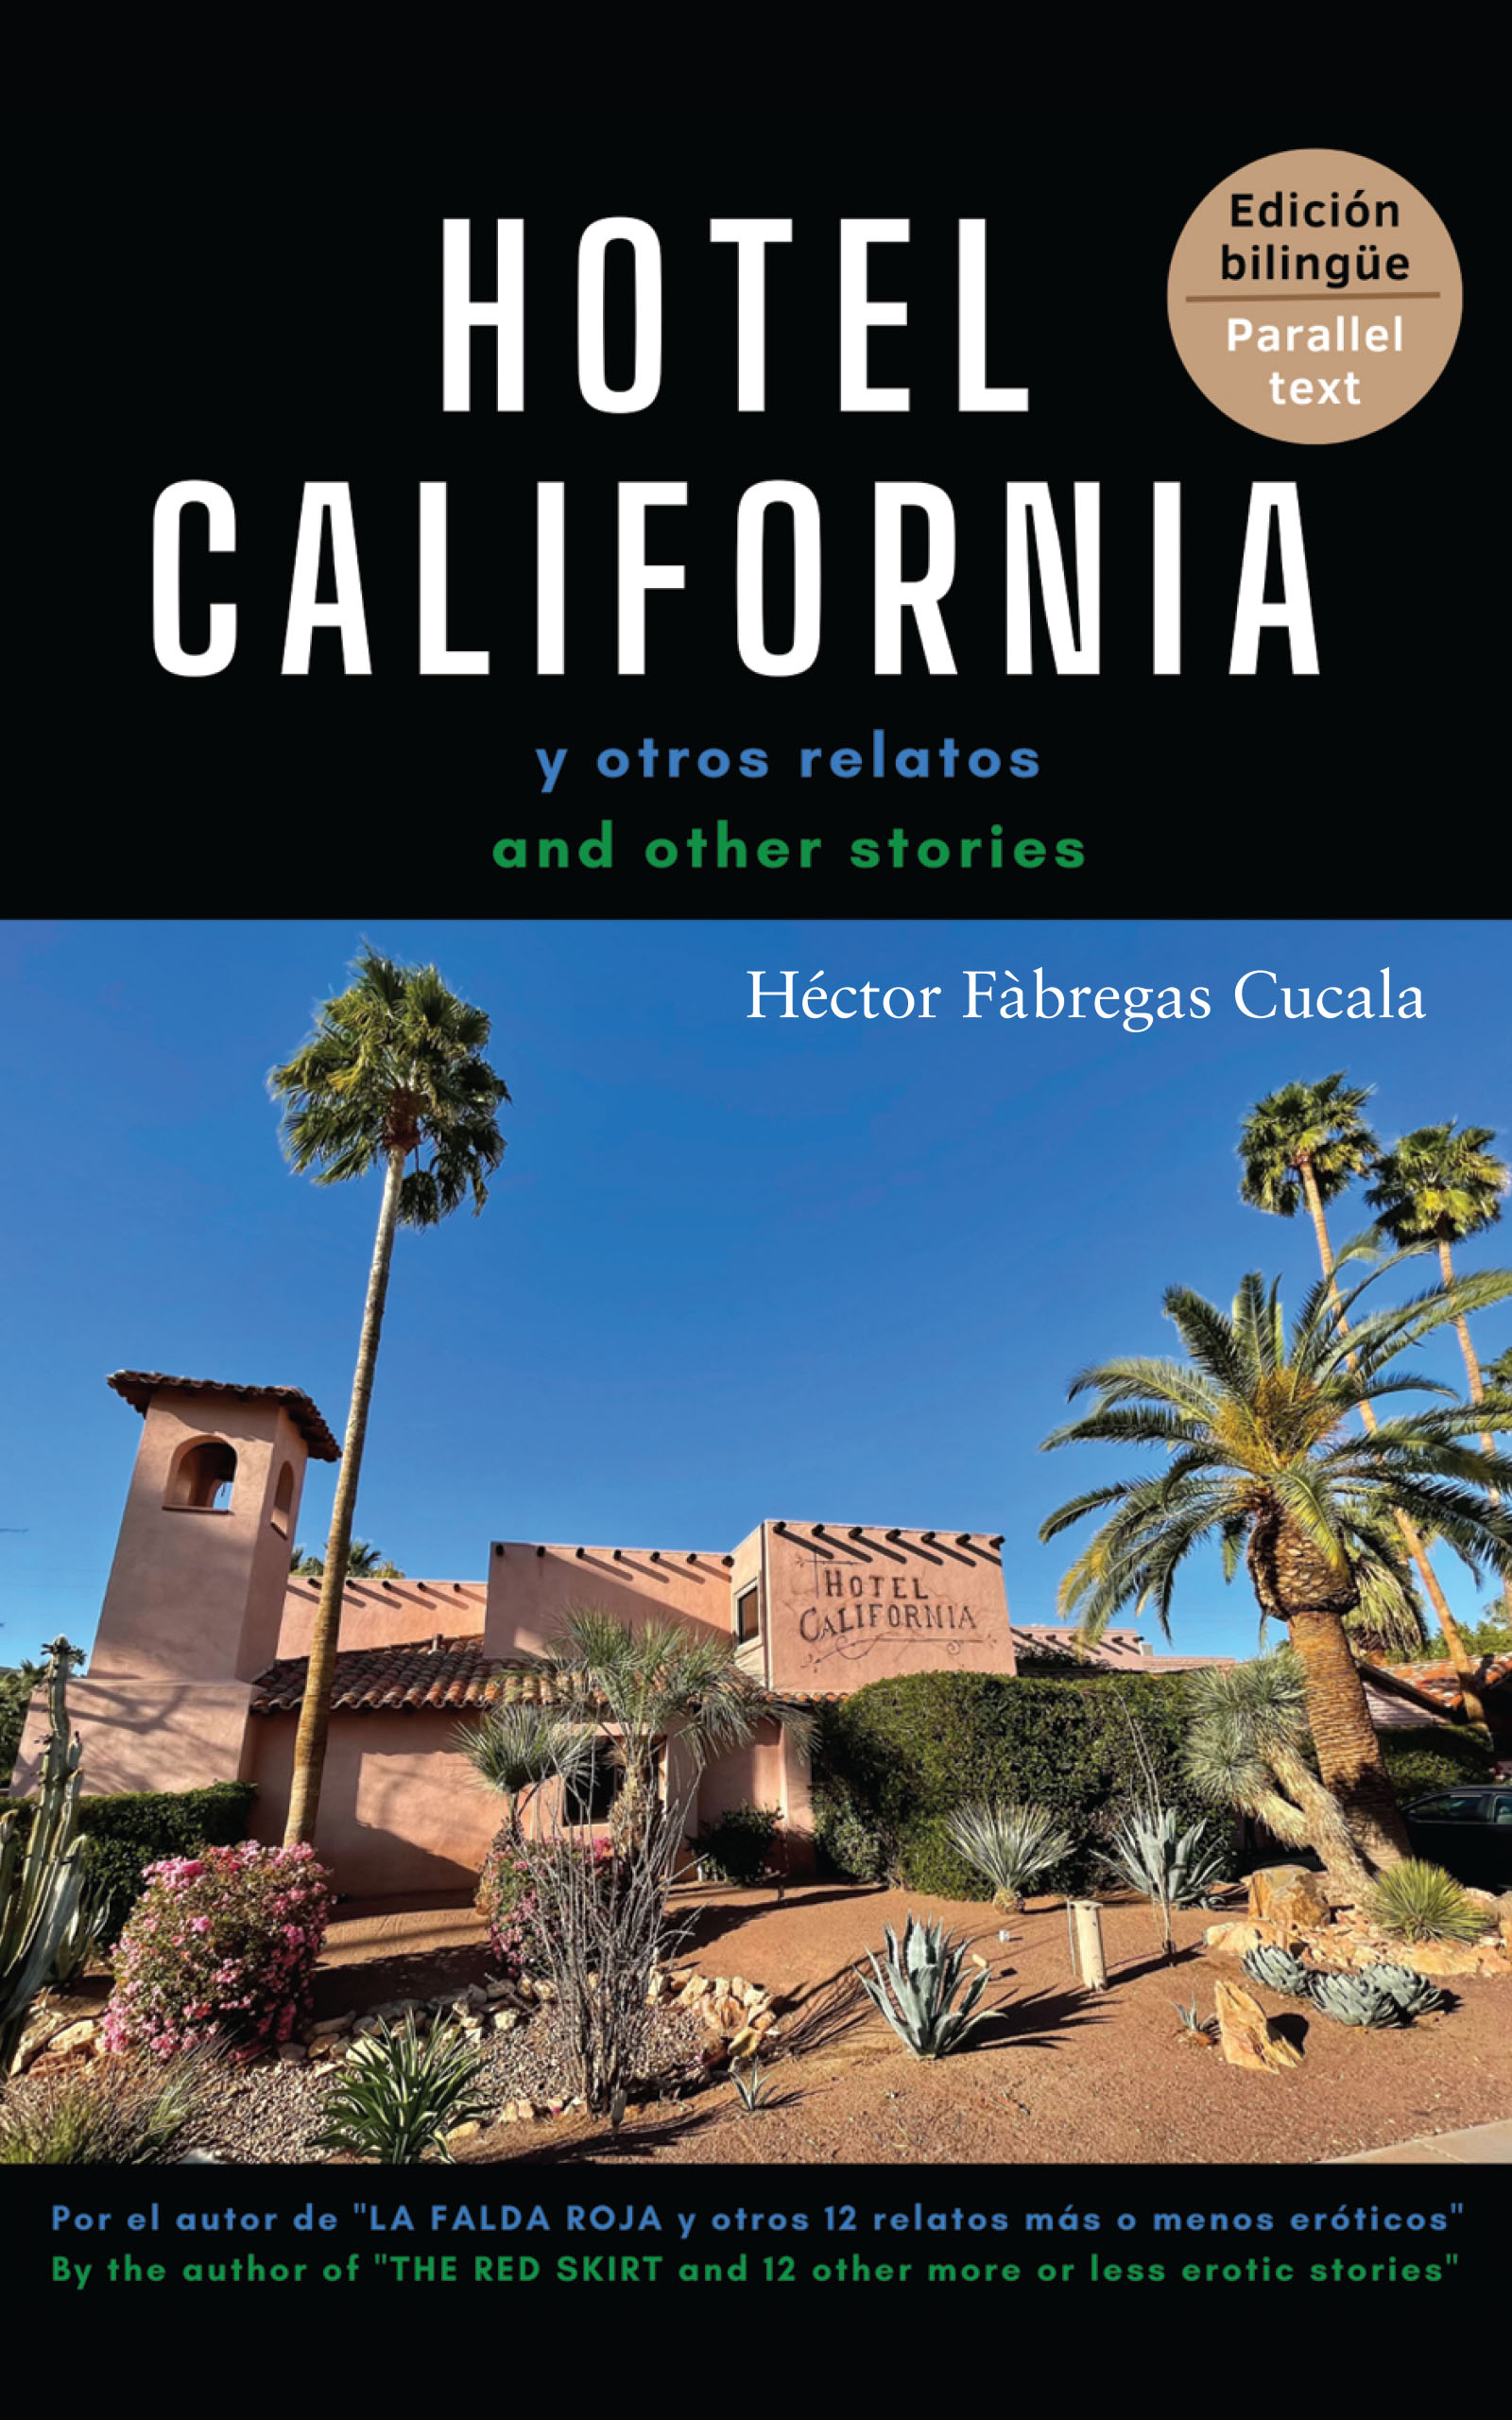 Hotel California y otros relatos, de Héctor Fàbregas Cucala